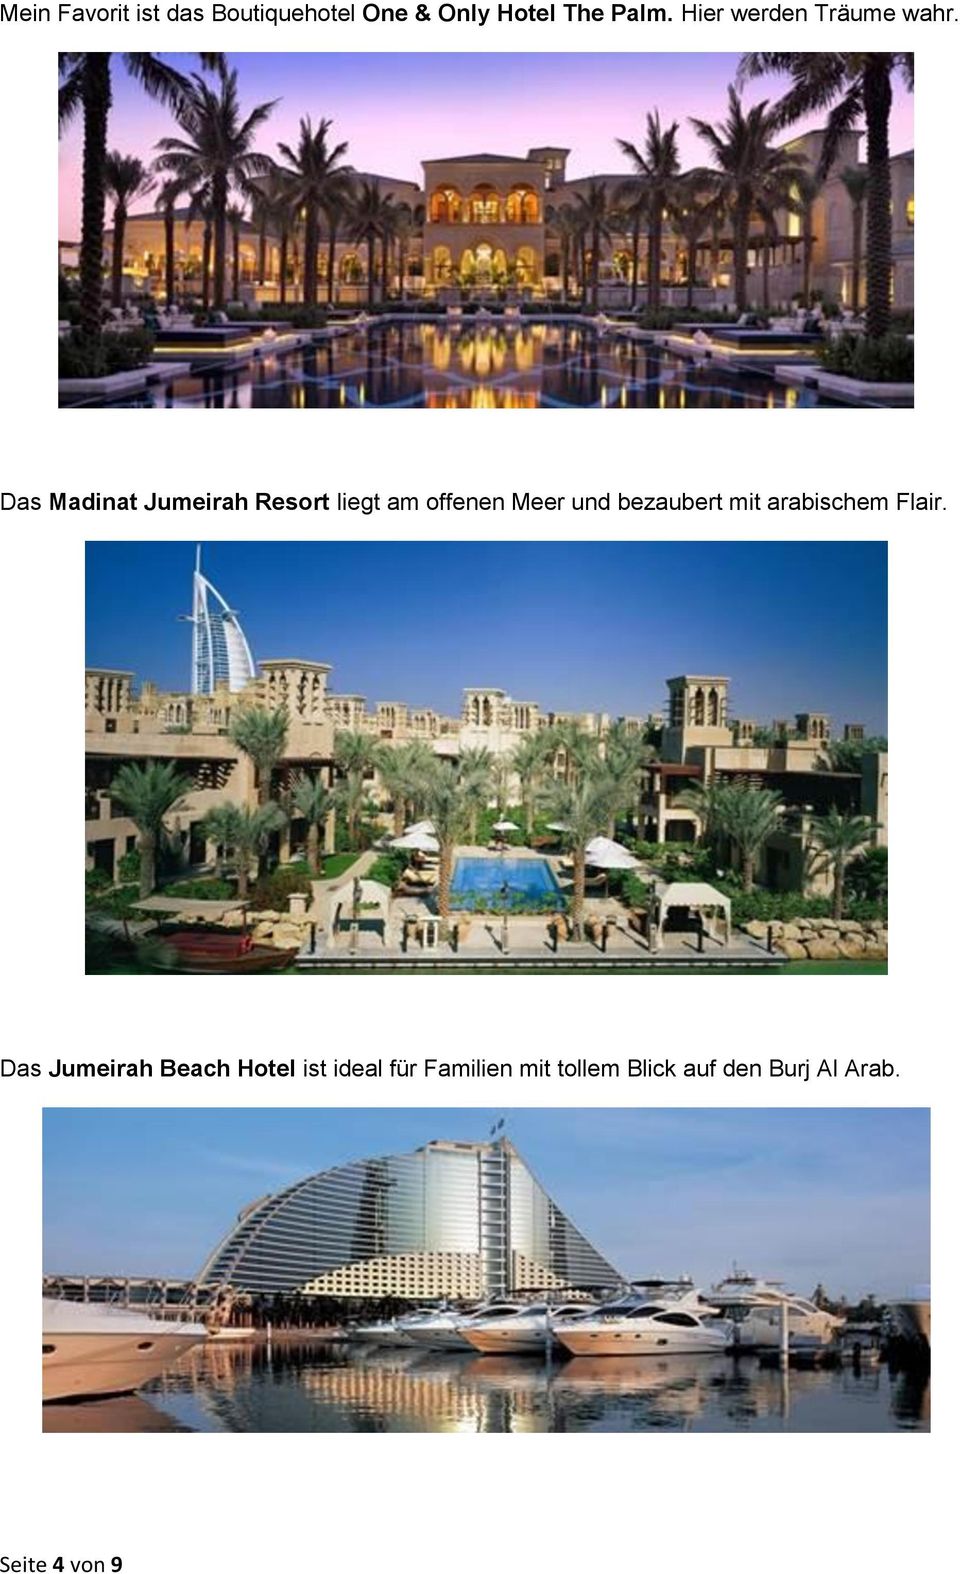 Das Madinat Jumeirah Resort liegt am offenen Meer und bezaubert mit